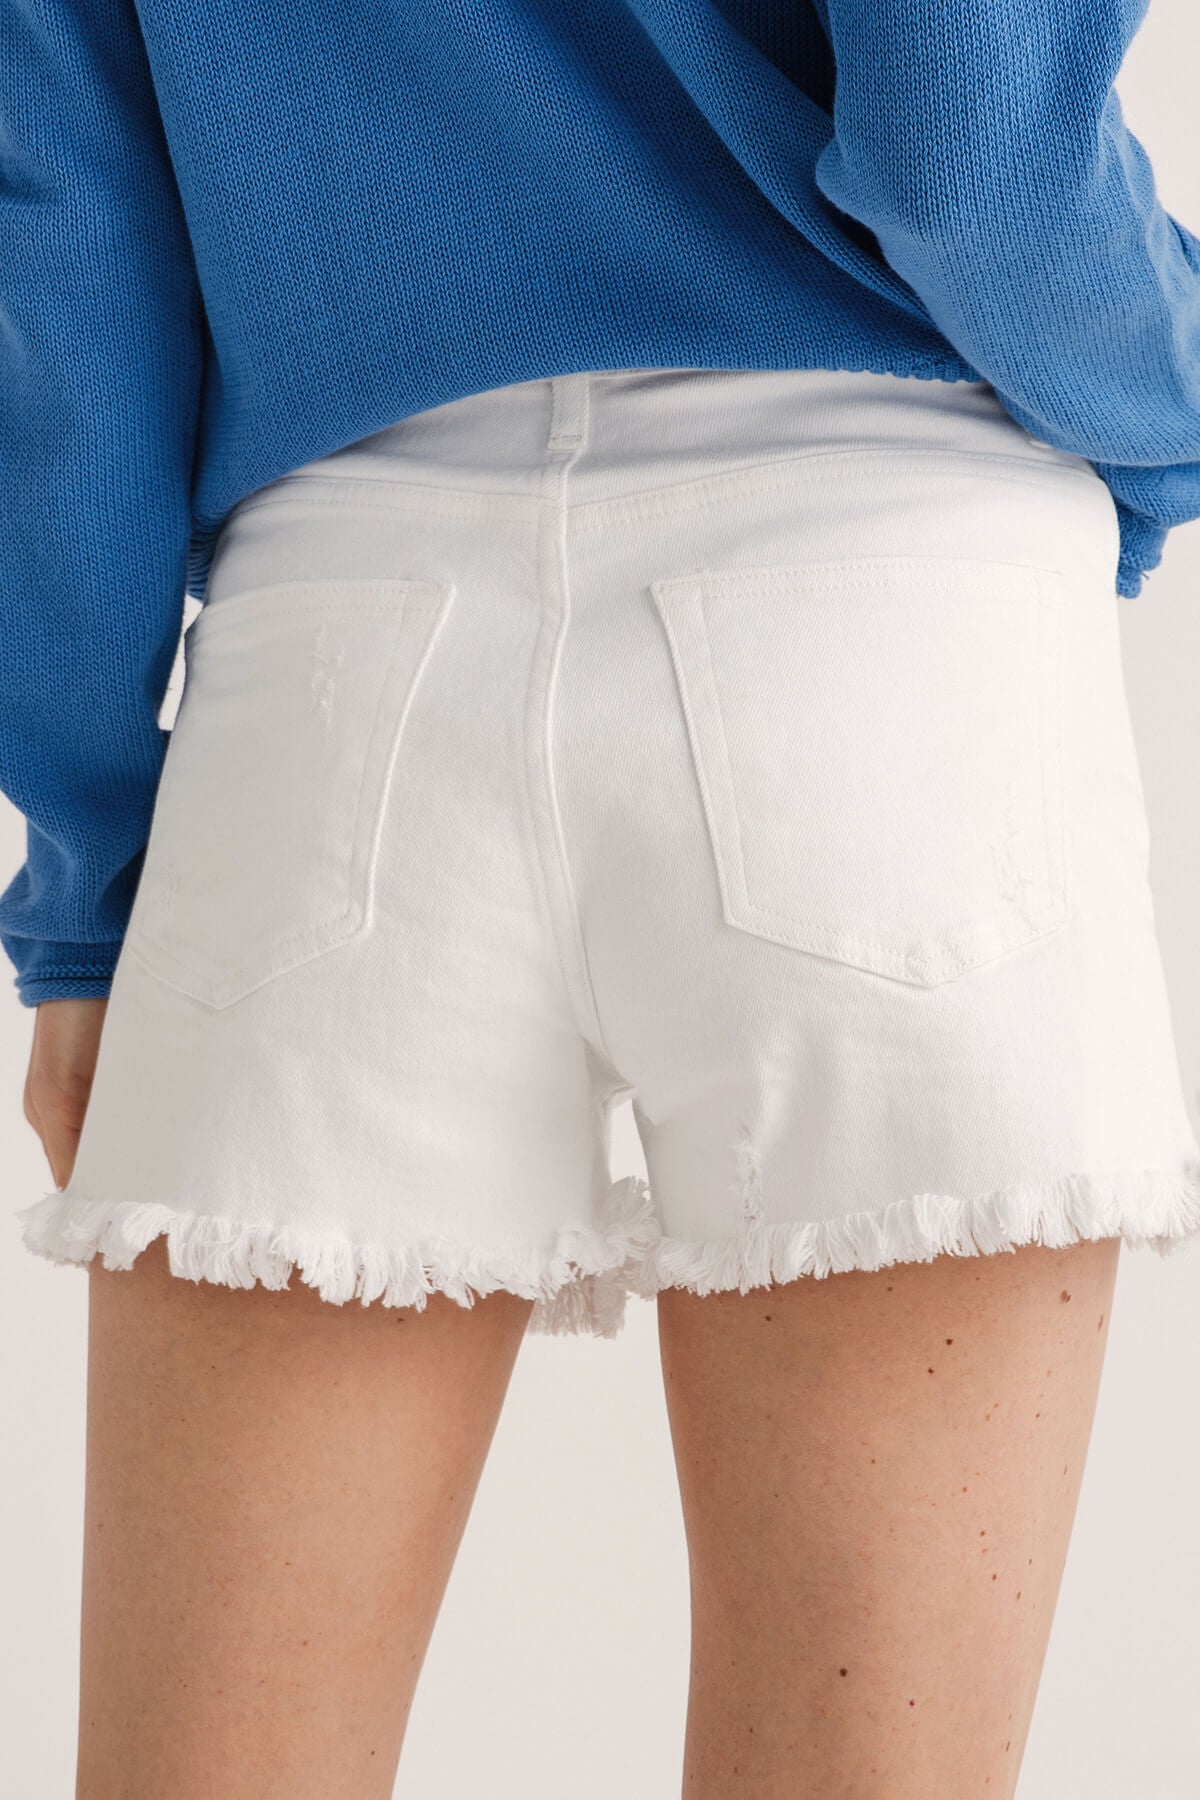 Risen White Cutoff Shorts